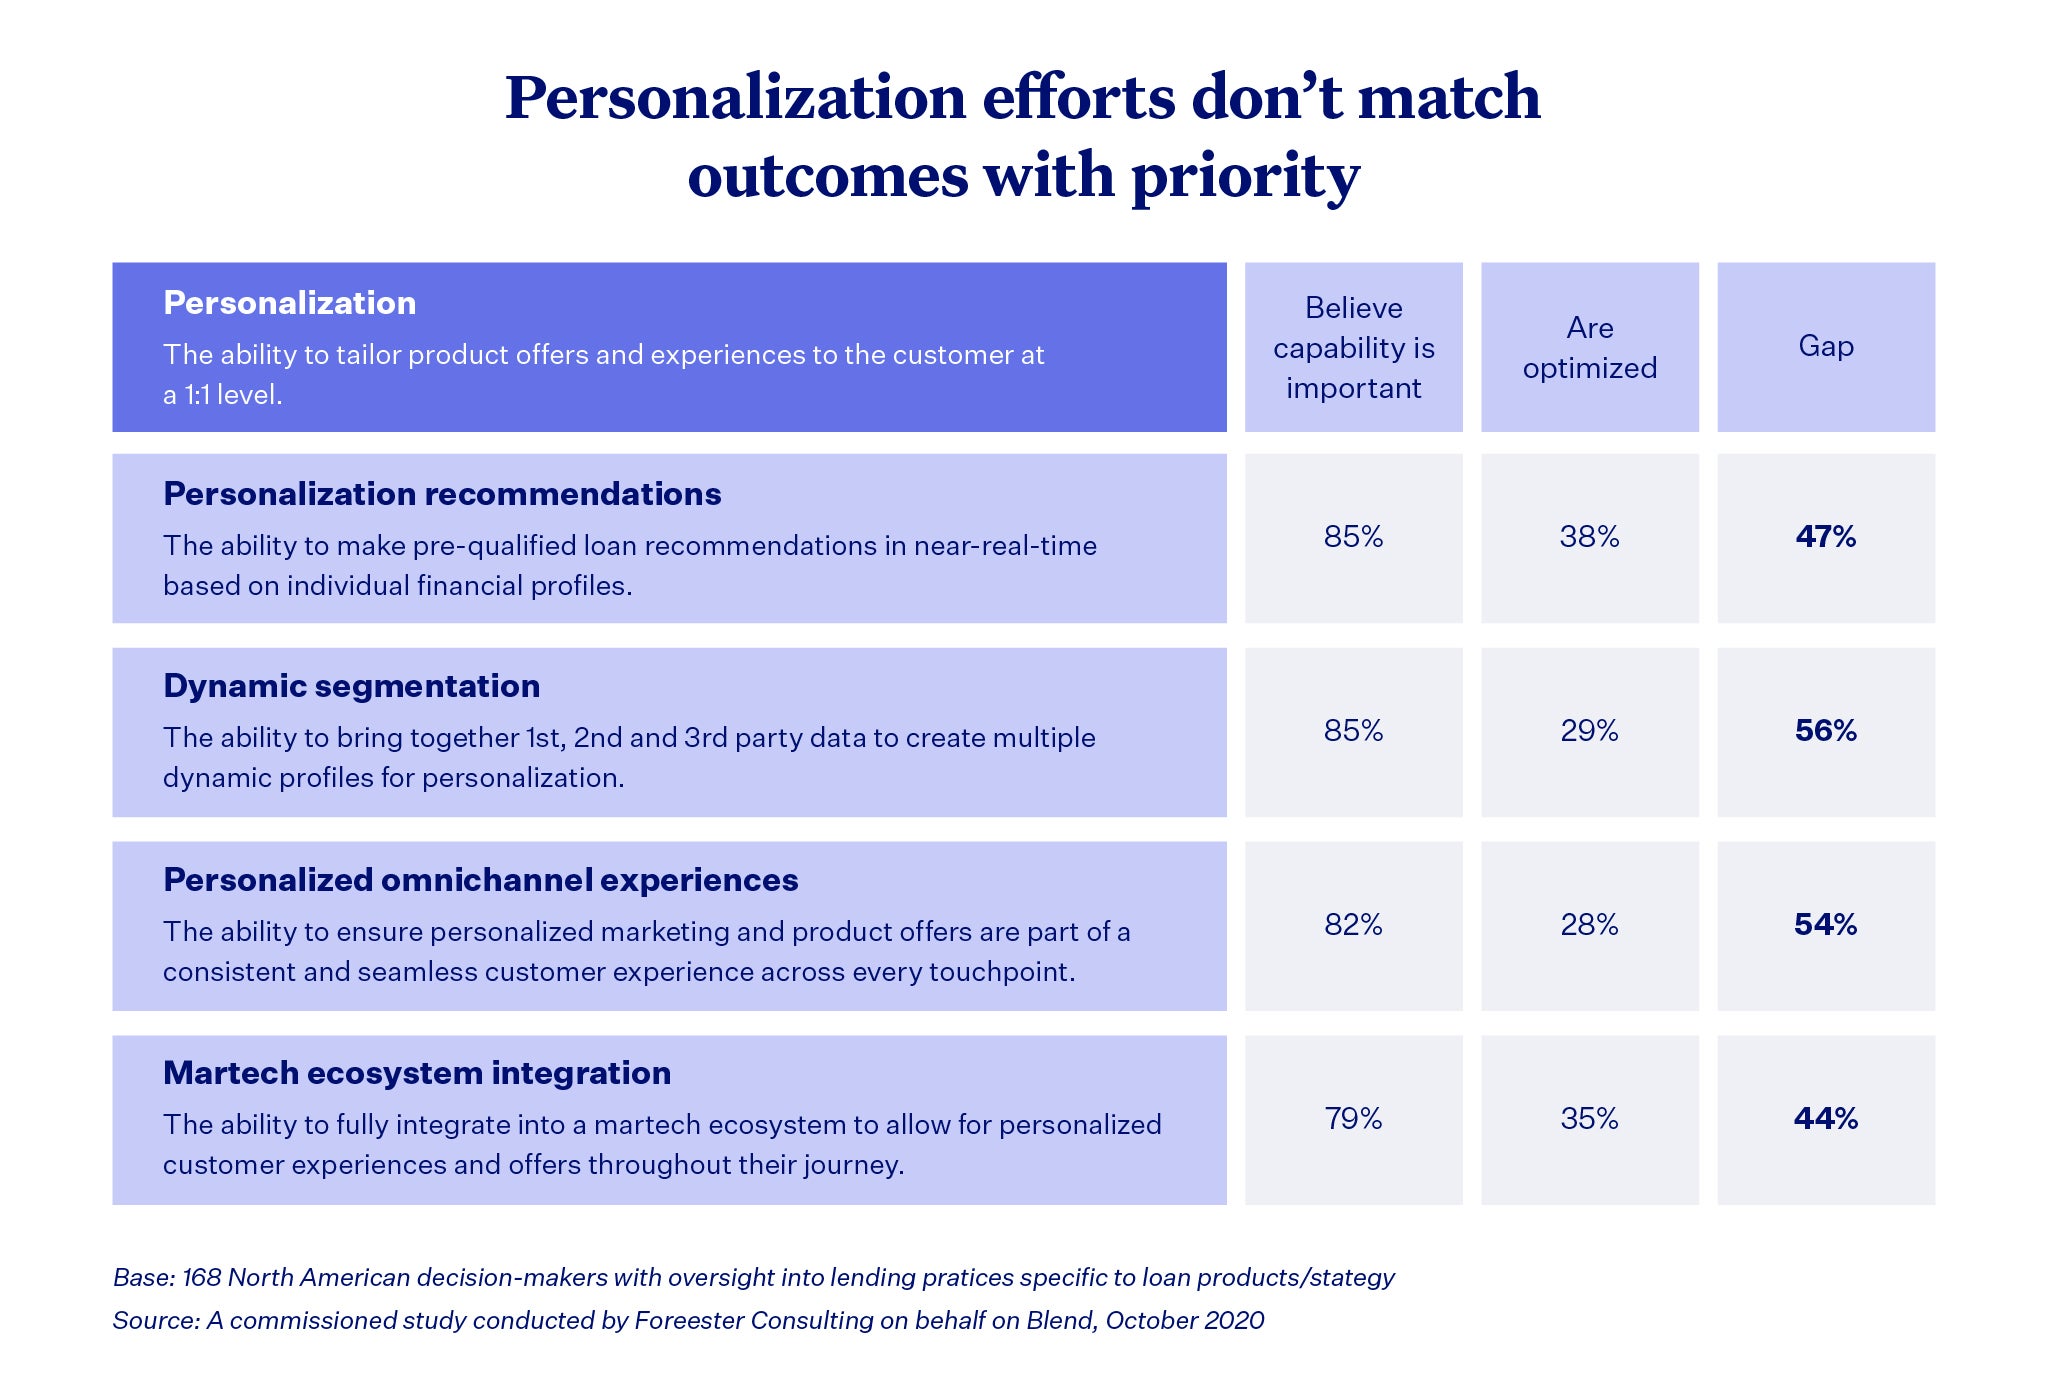 Chart describing the gap in personalization efforts